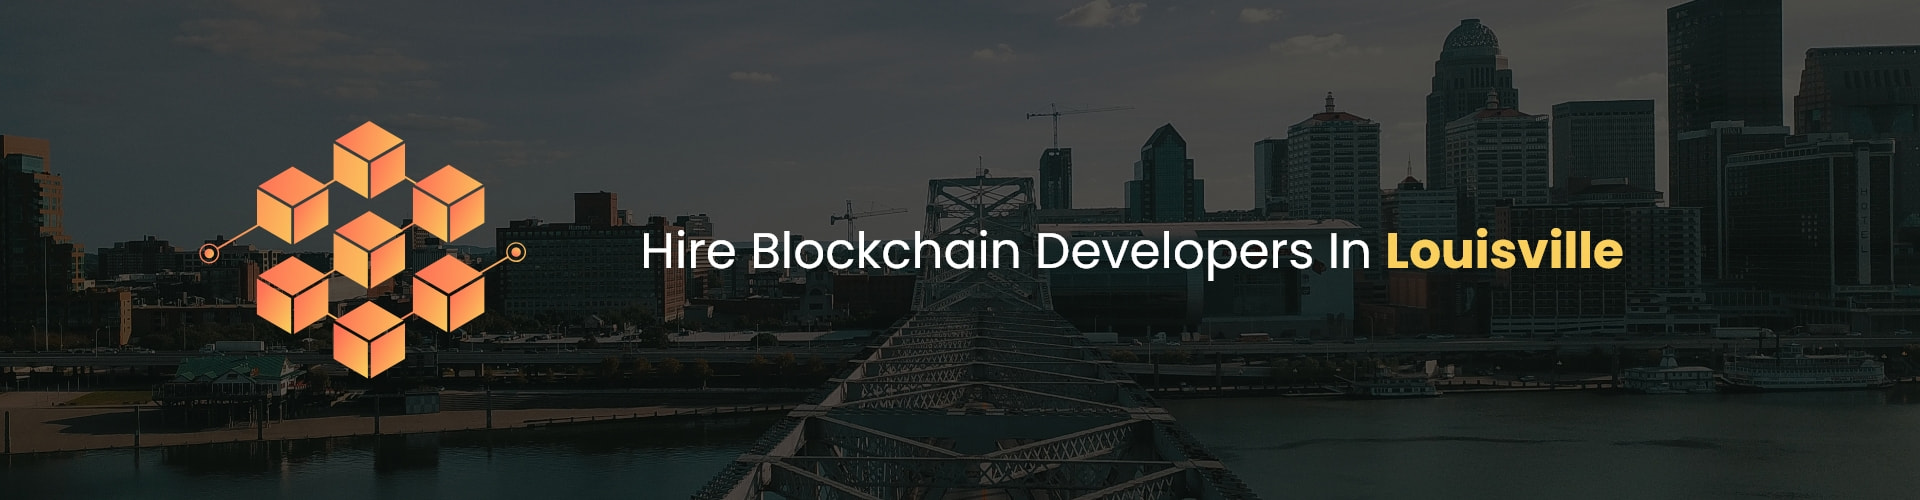 hire blockchain developers in louisville